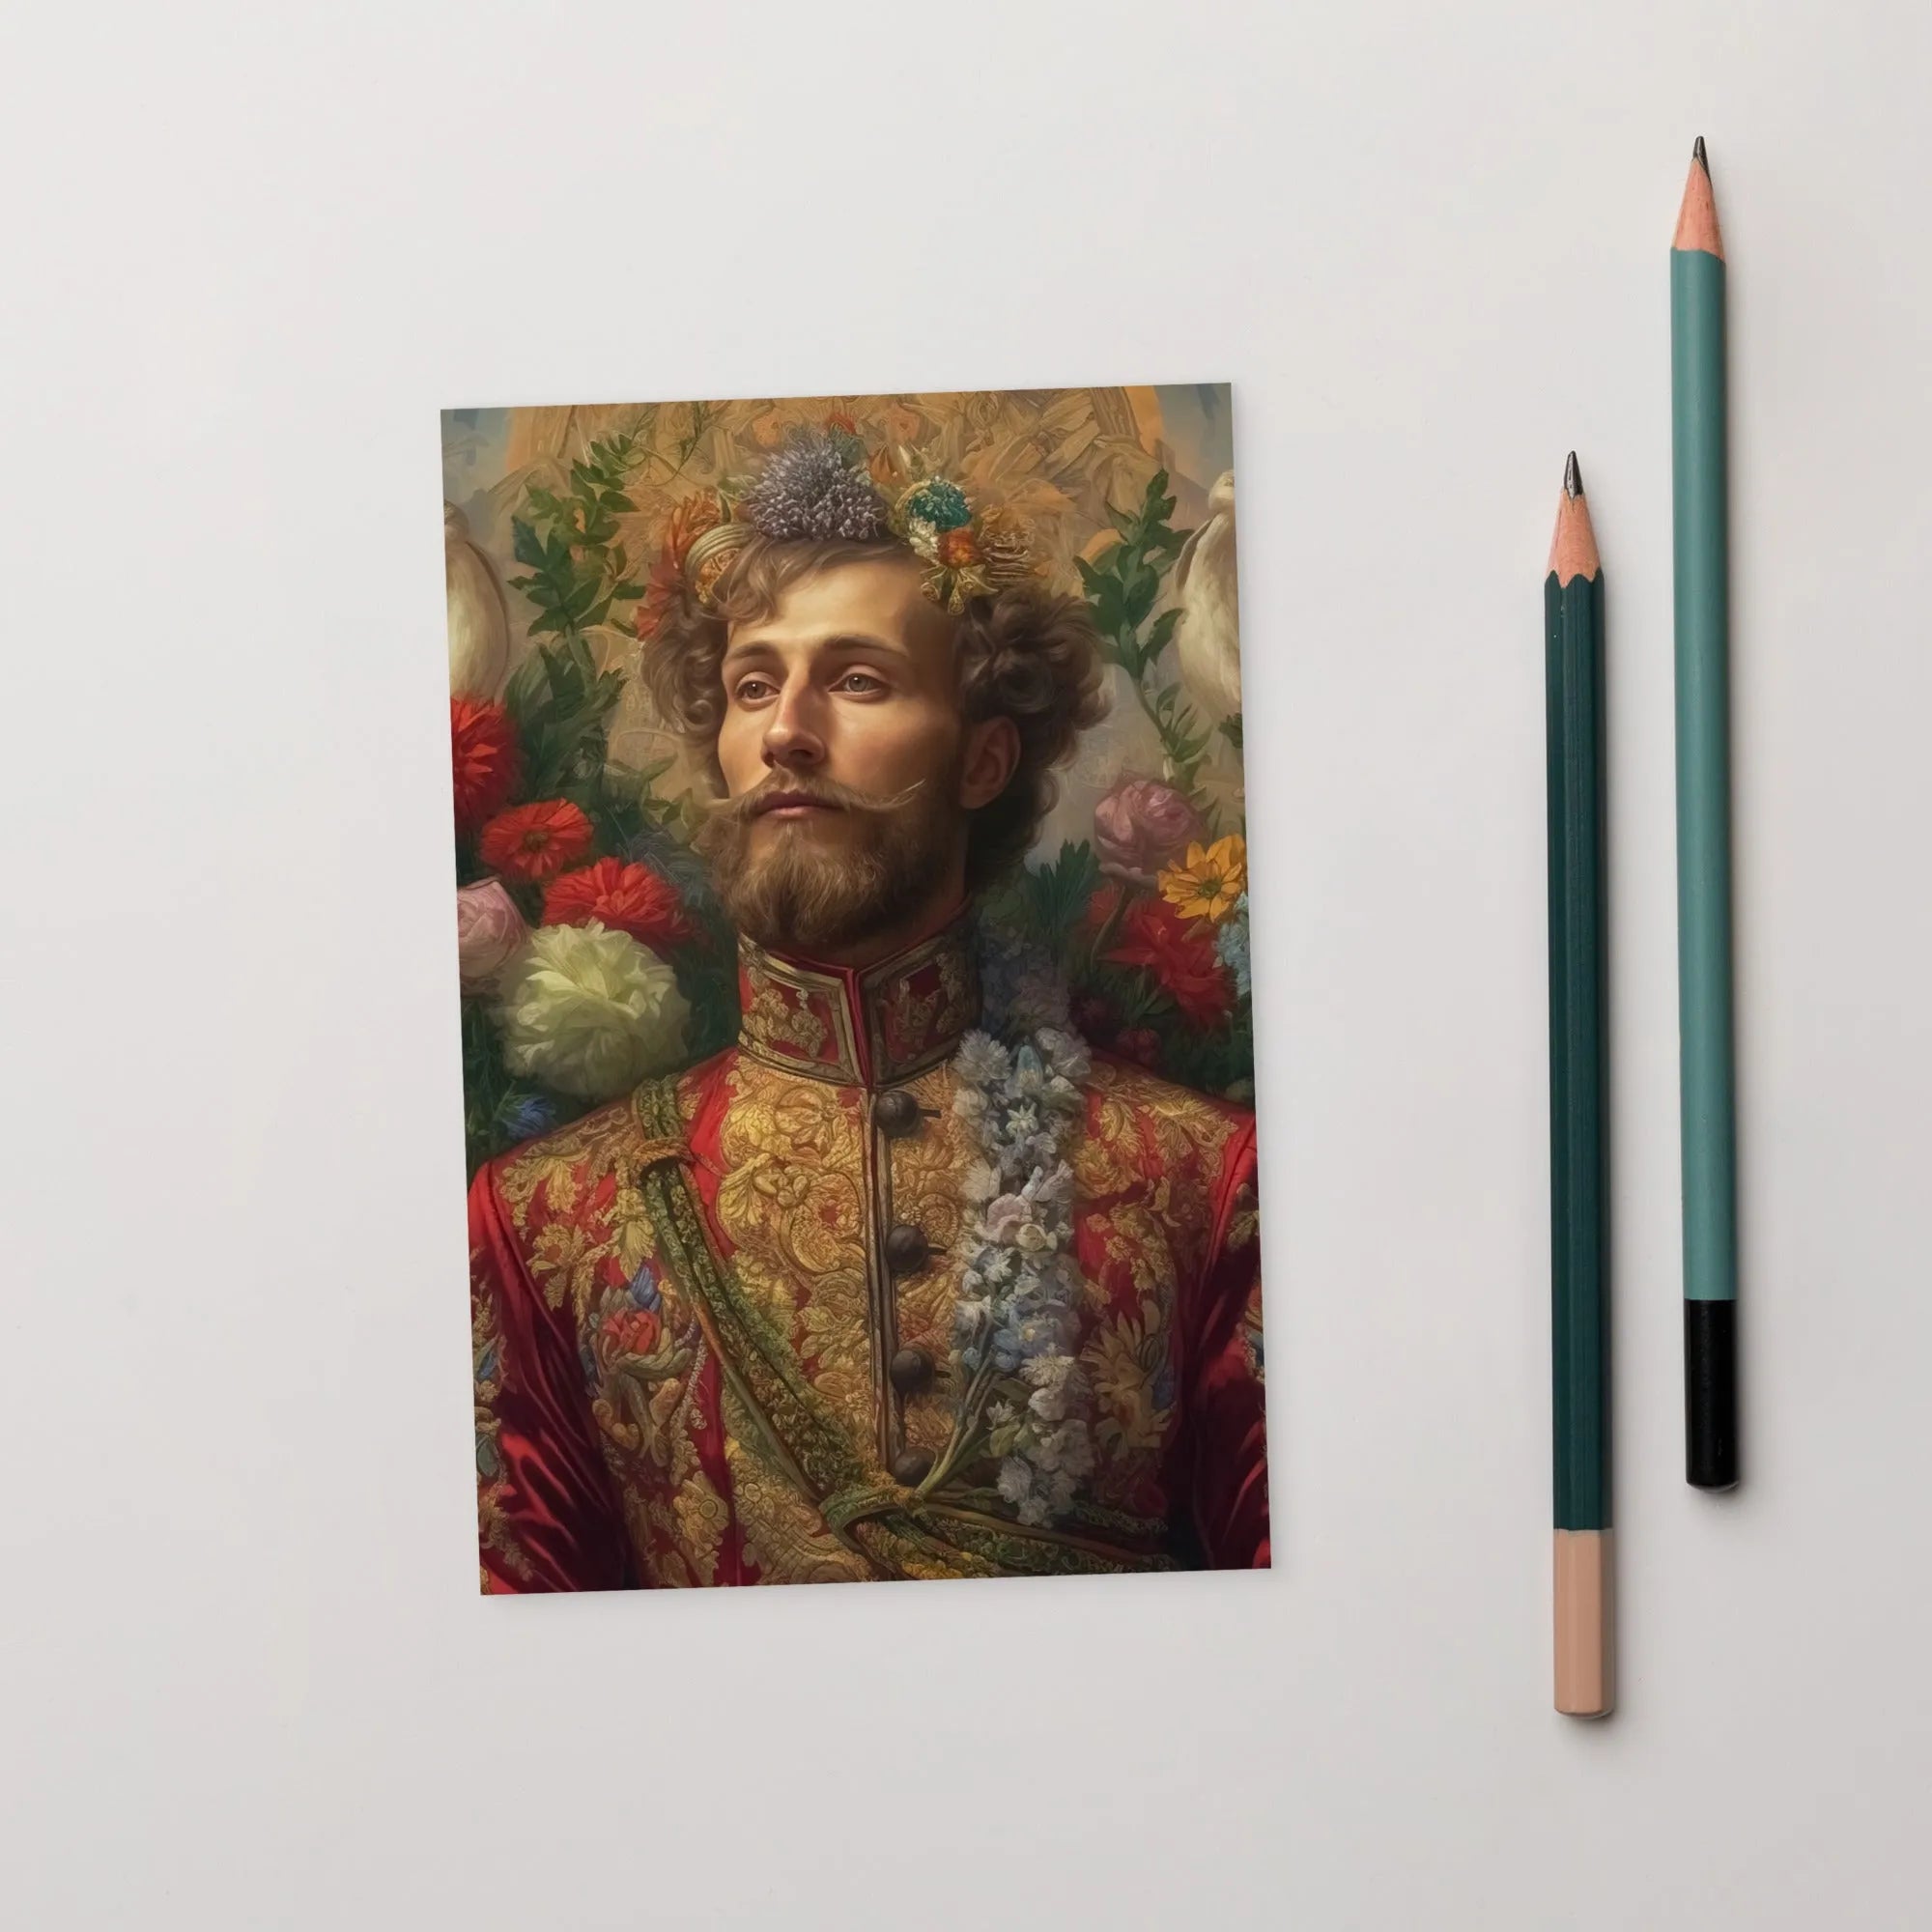 Prince Fyodor - Handsome Gay Russian Royalty Queerart Print - 4’x6’ - Posters Prints & Visual Artwork - Aesthetic Art